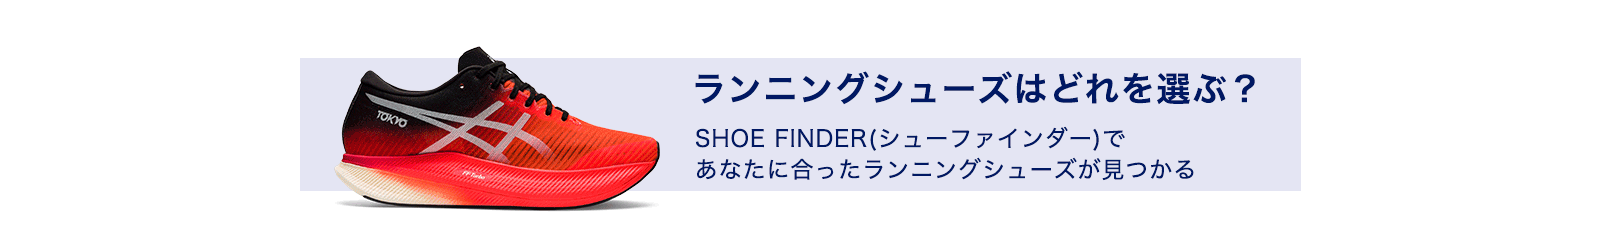 run top shoe finder banner 21aw